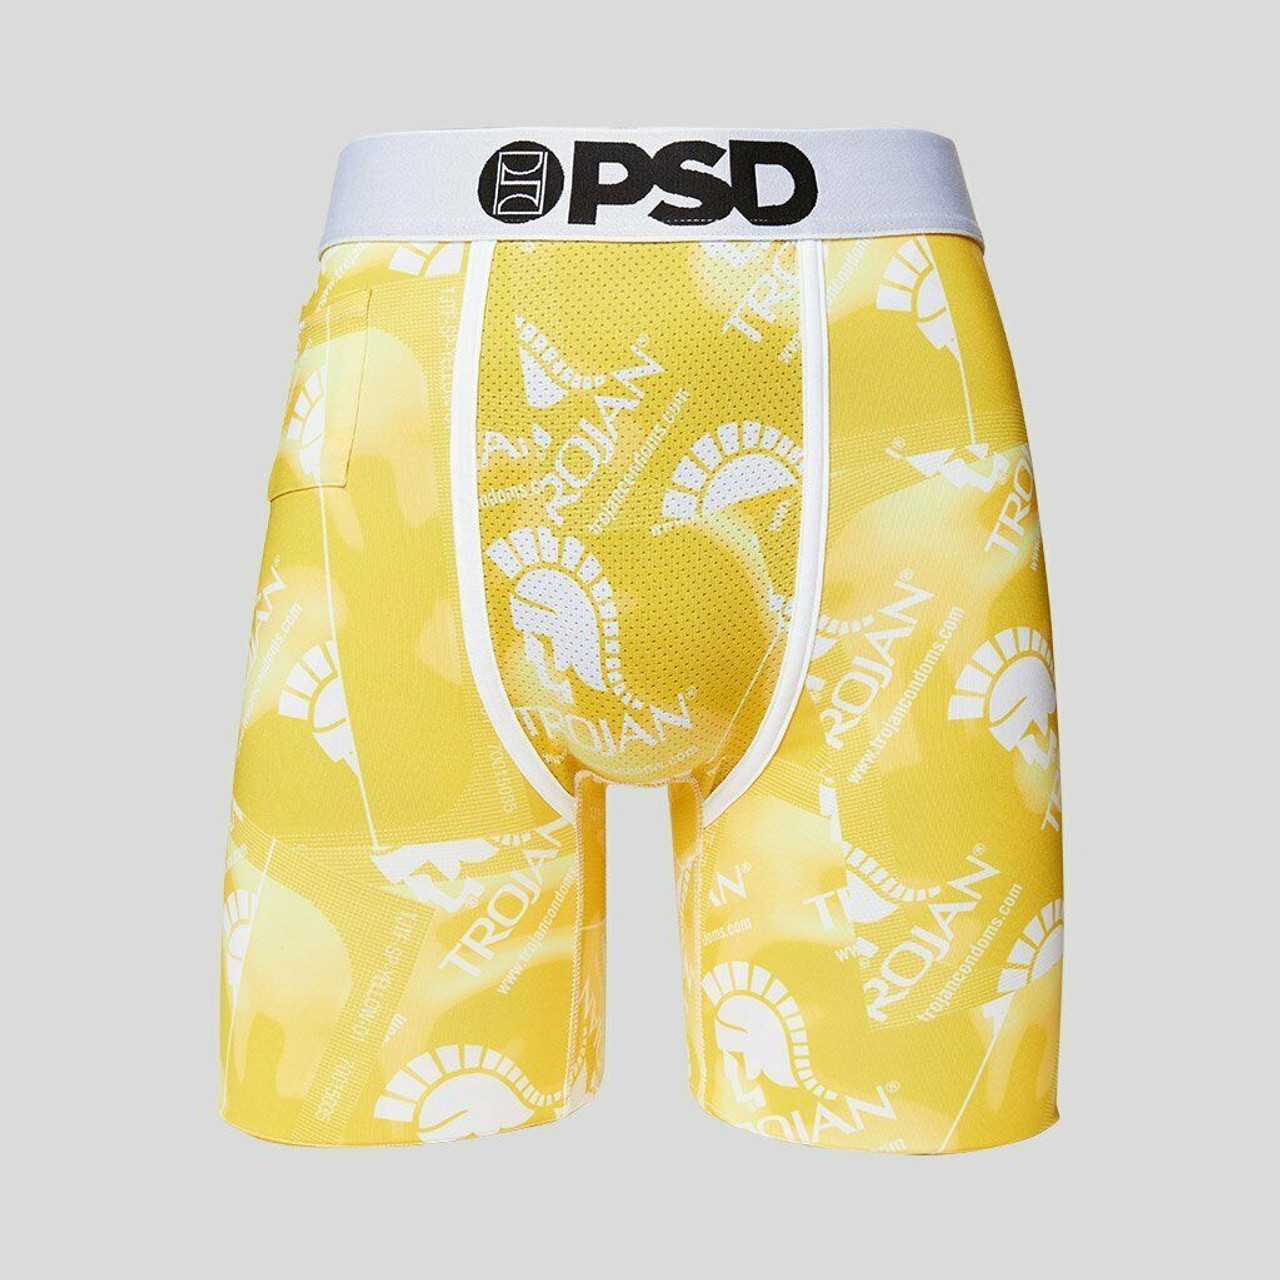 PSD Underwear Trojan x PSD Hidden Pocket Black Boxer Briefs